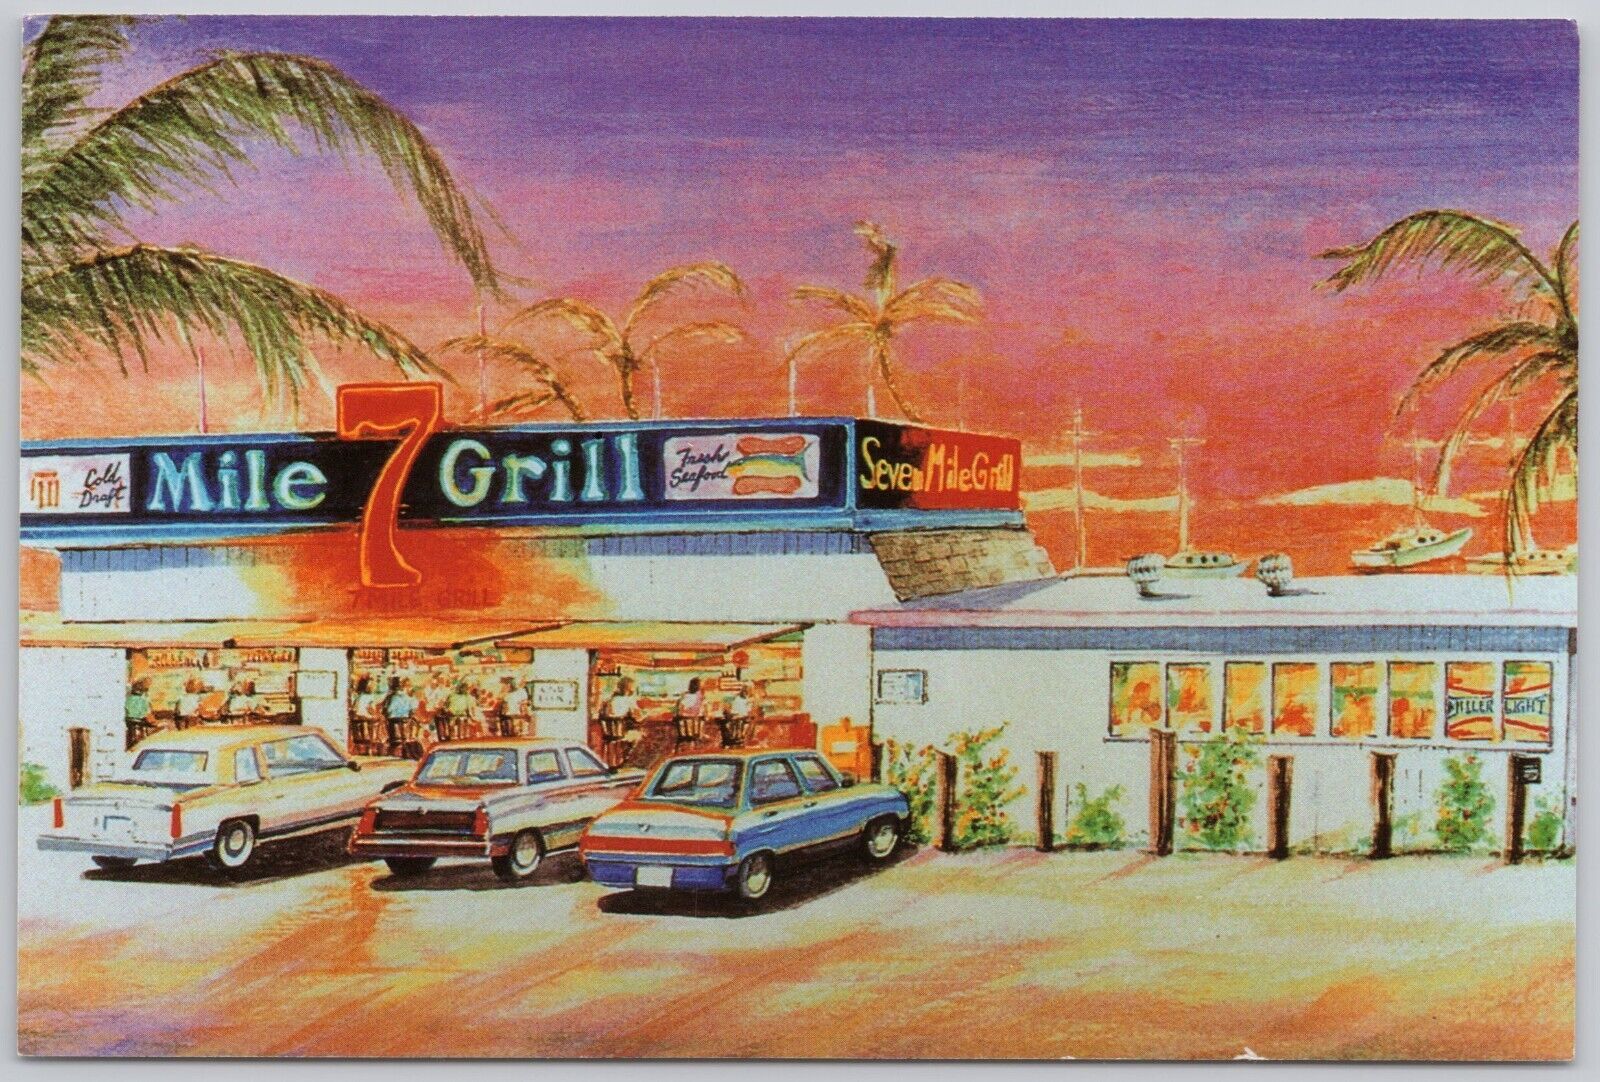 Florida Keys, Florida Postcard, Vintage Cars, Mile 7 Grill, Restaurant